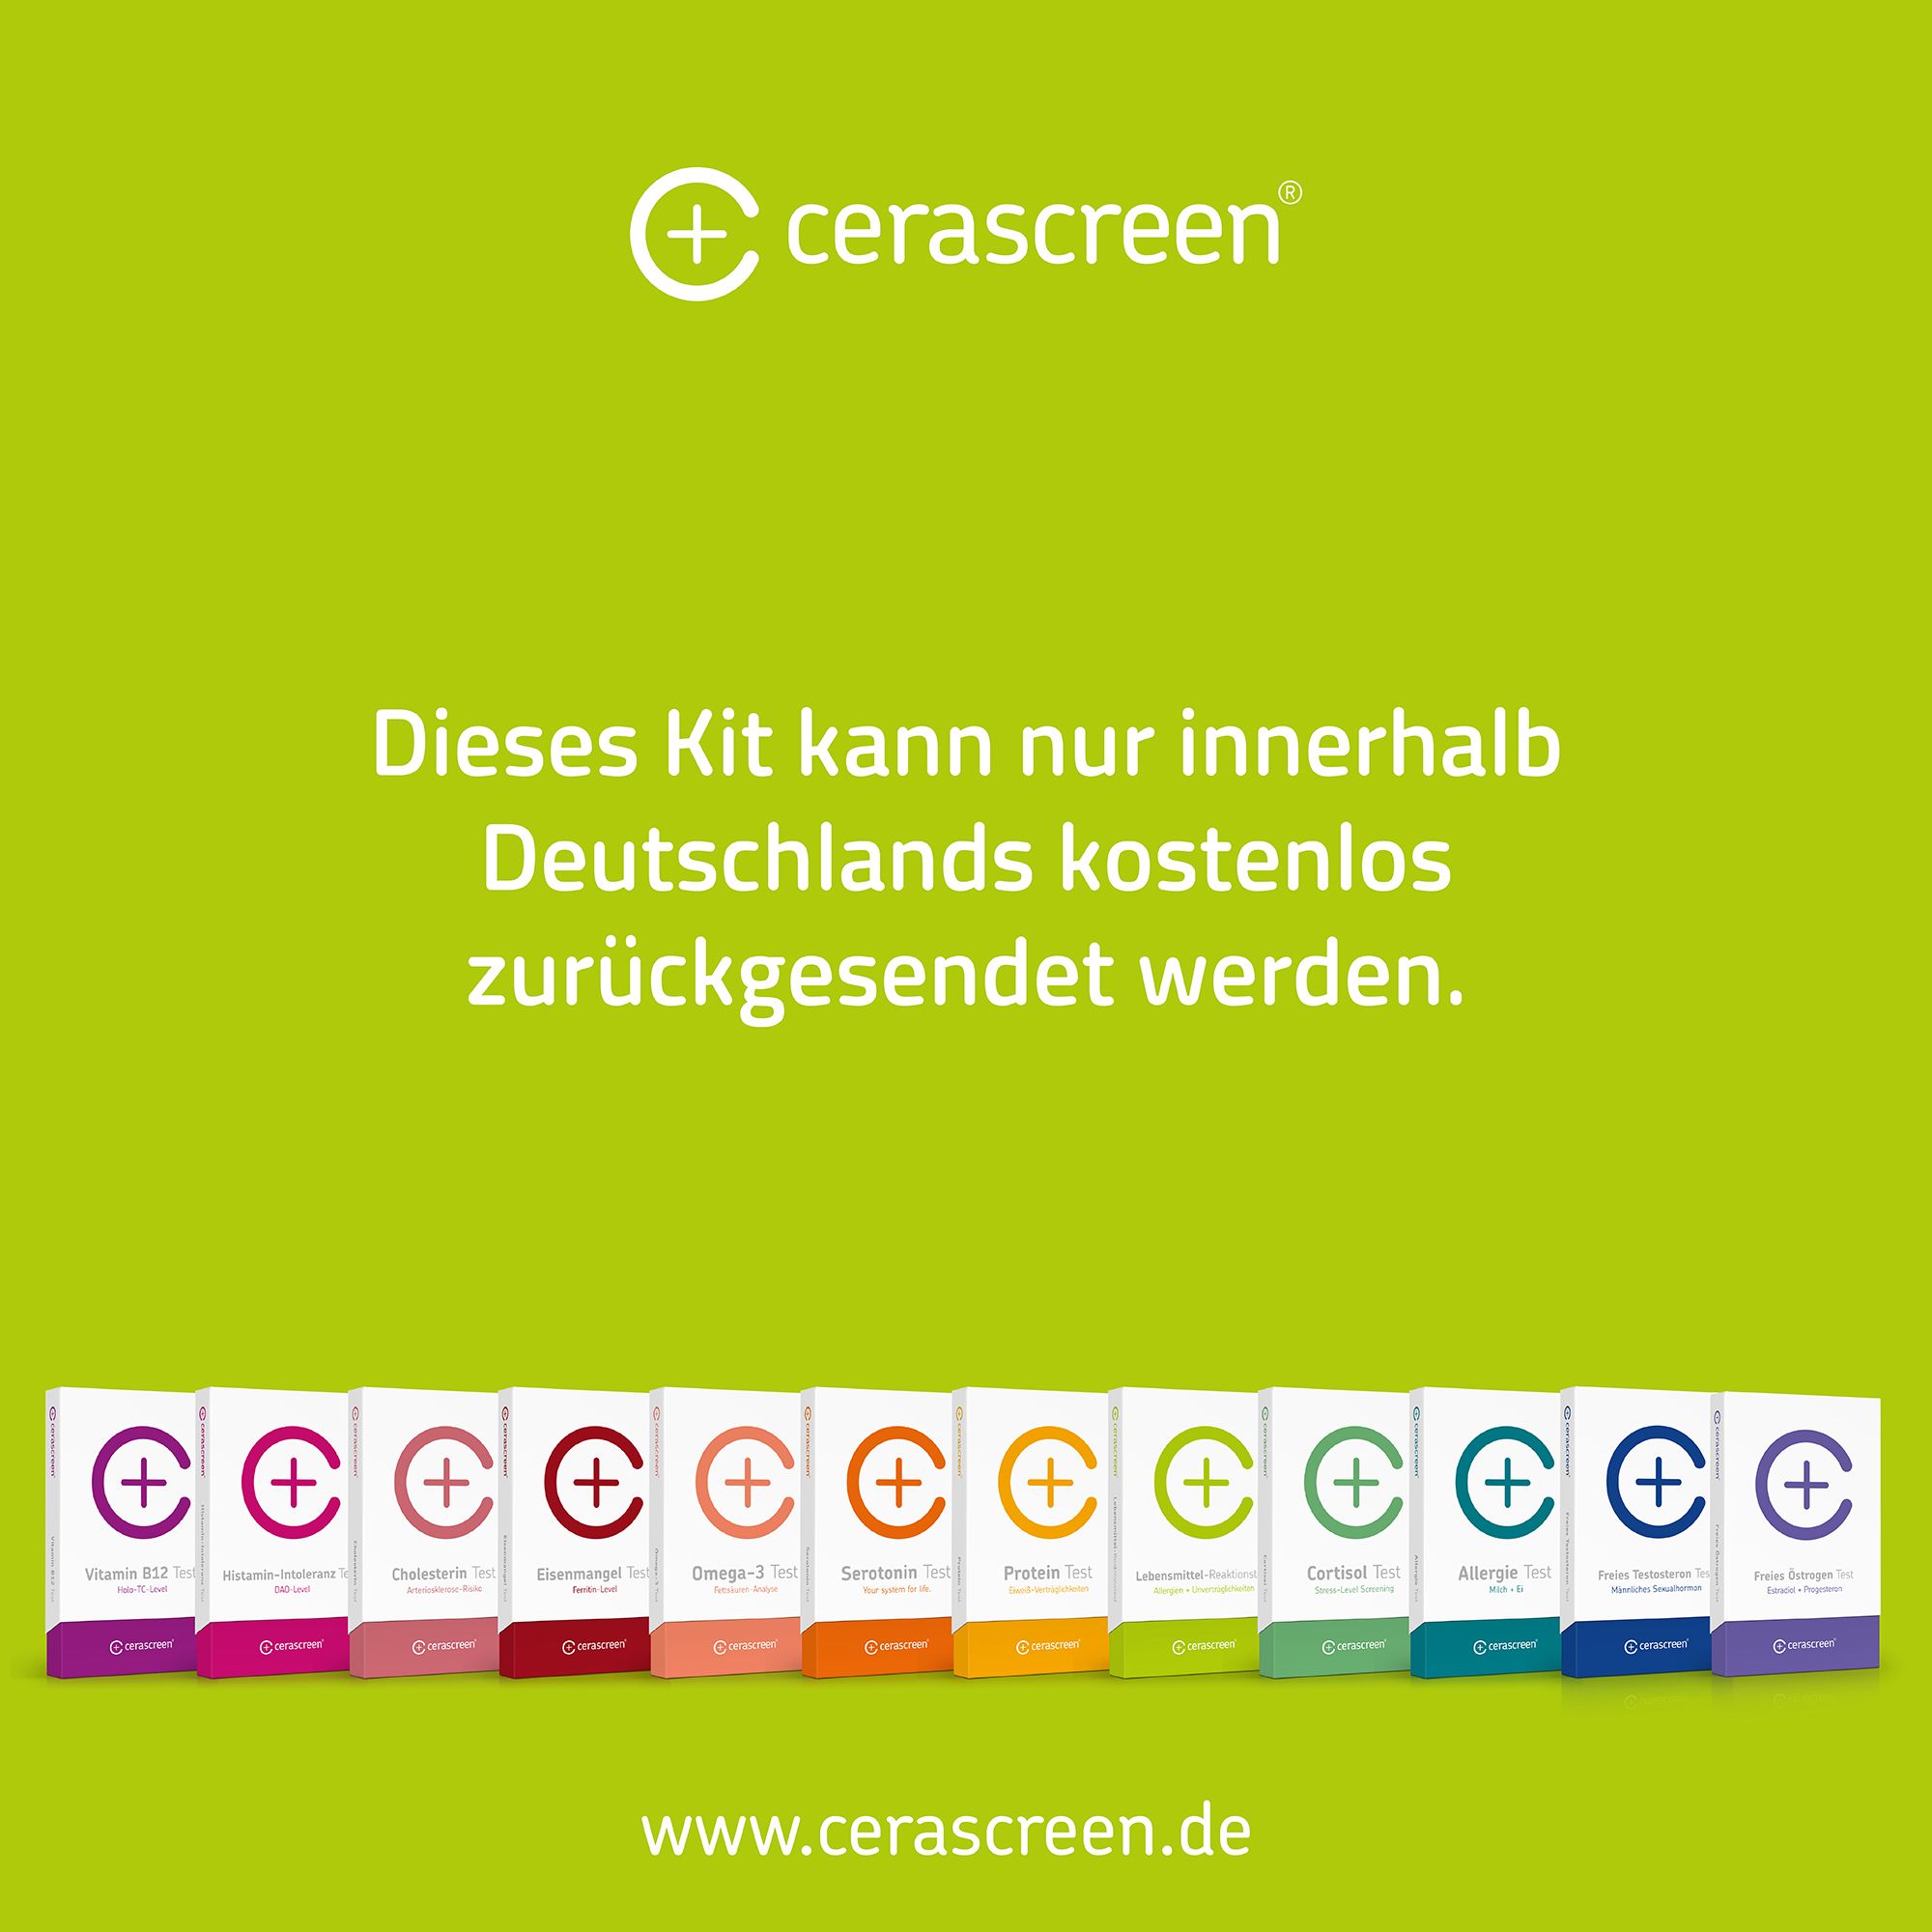 cerascreen® Lebensmittel-Reaktionstest